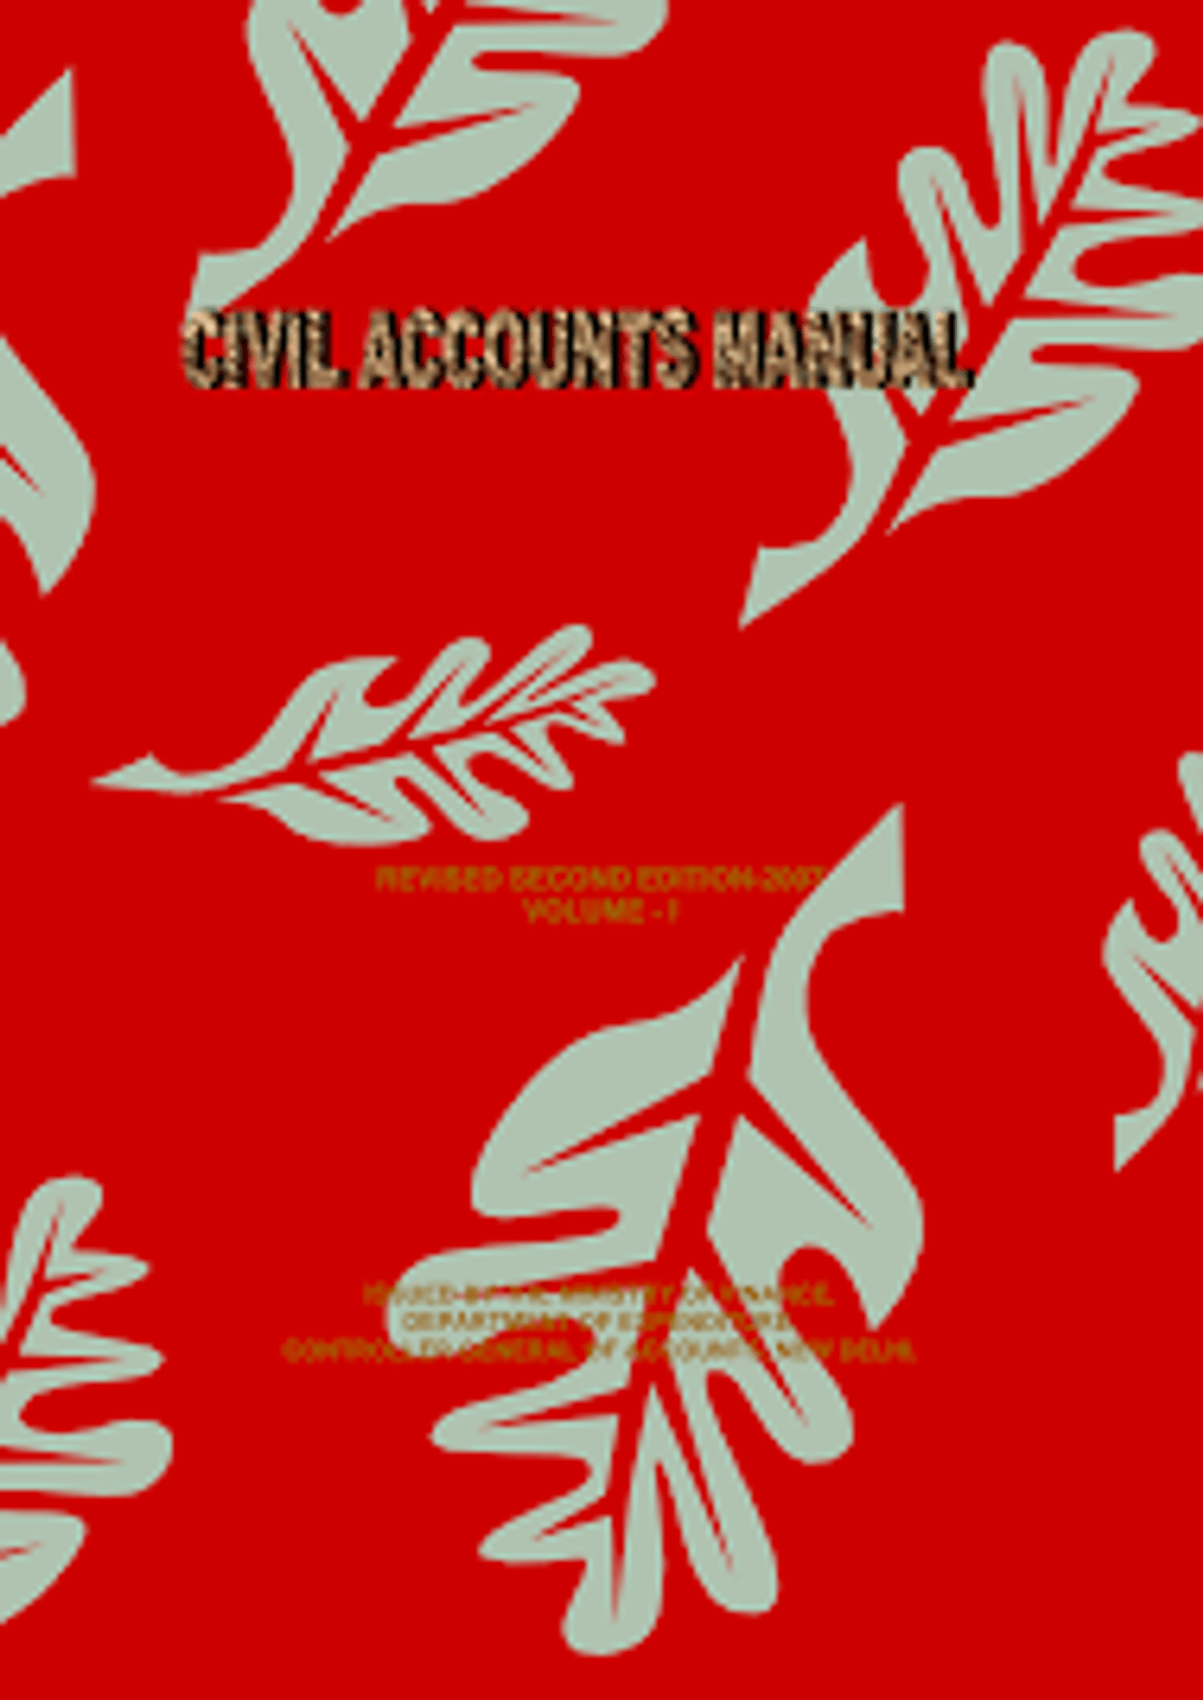 Amendment in Civil Accounts Manual Revised Second Edition -2007 Volume-I & II: FinMin Order